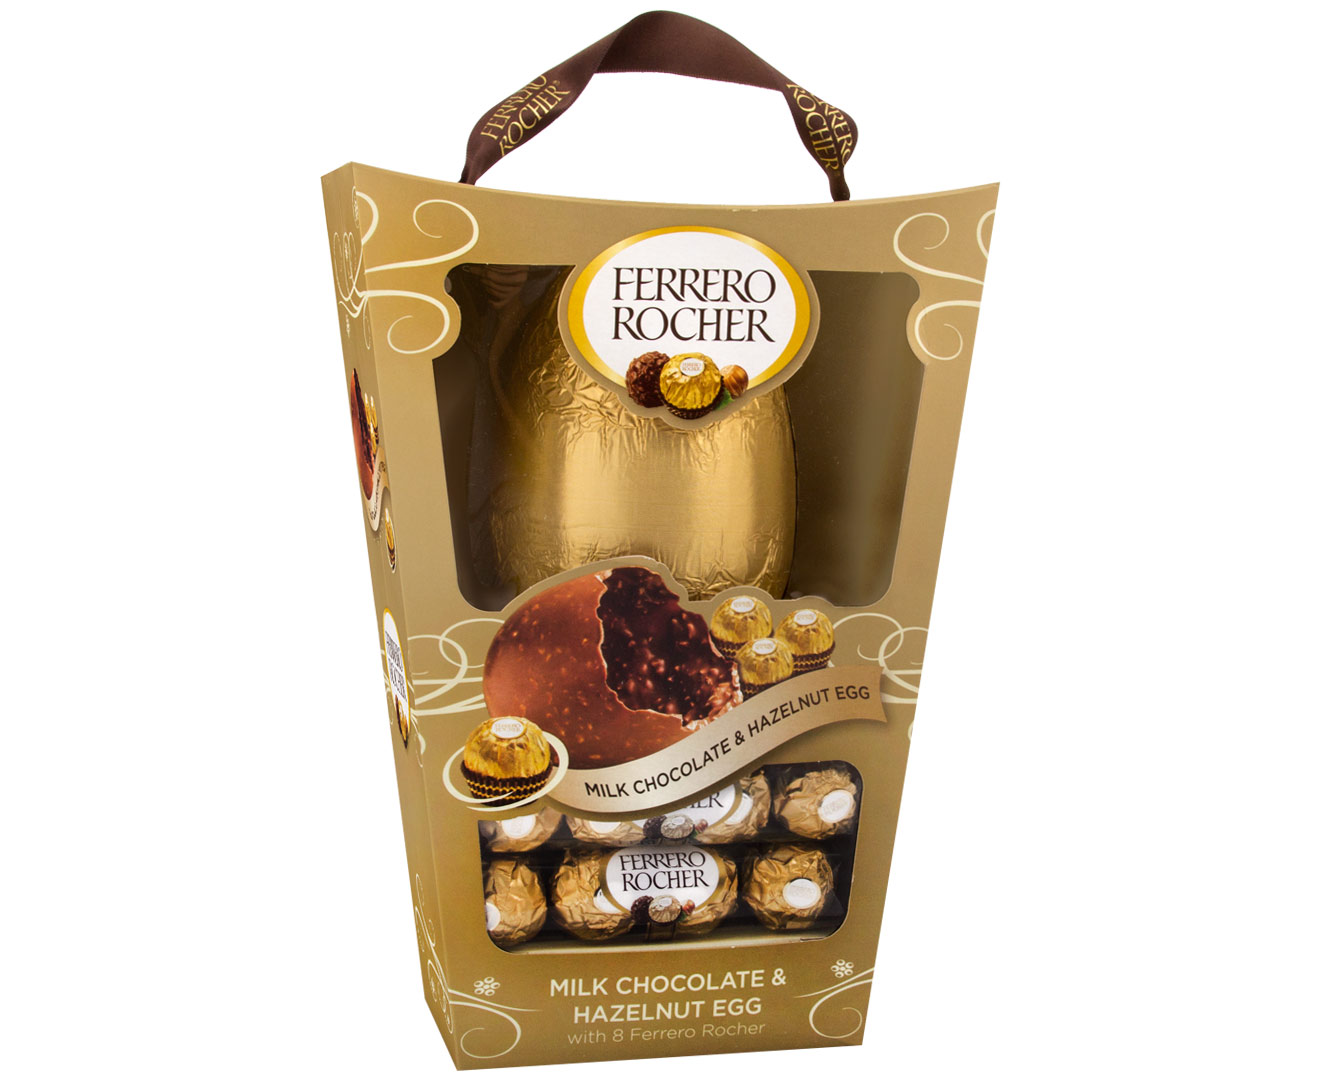 Ferrero Rocher Easter Egg transparent PNG - StickPNG